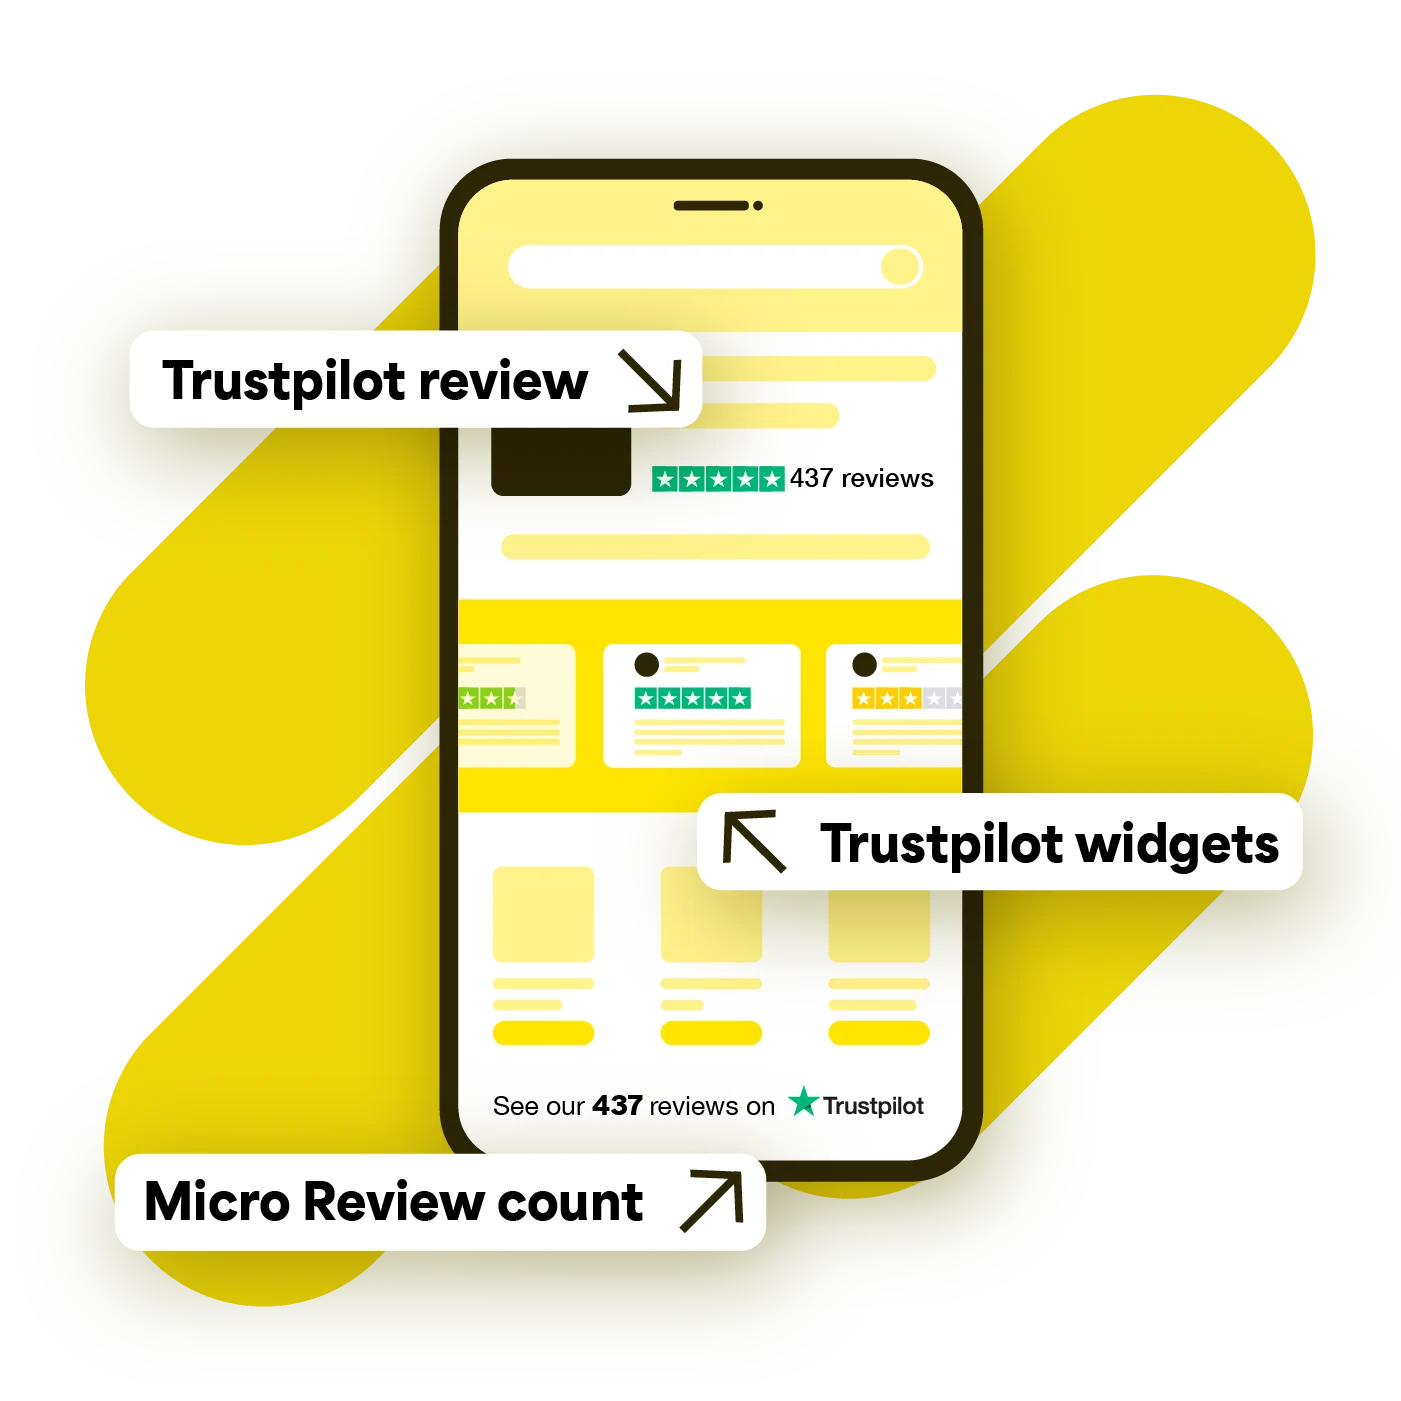 ENG - Trustpilot widgets 4 - Yellow